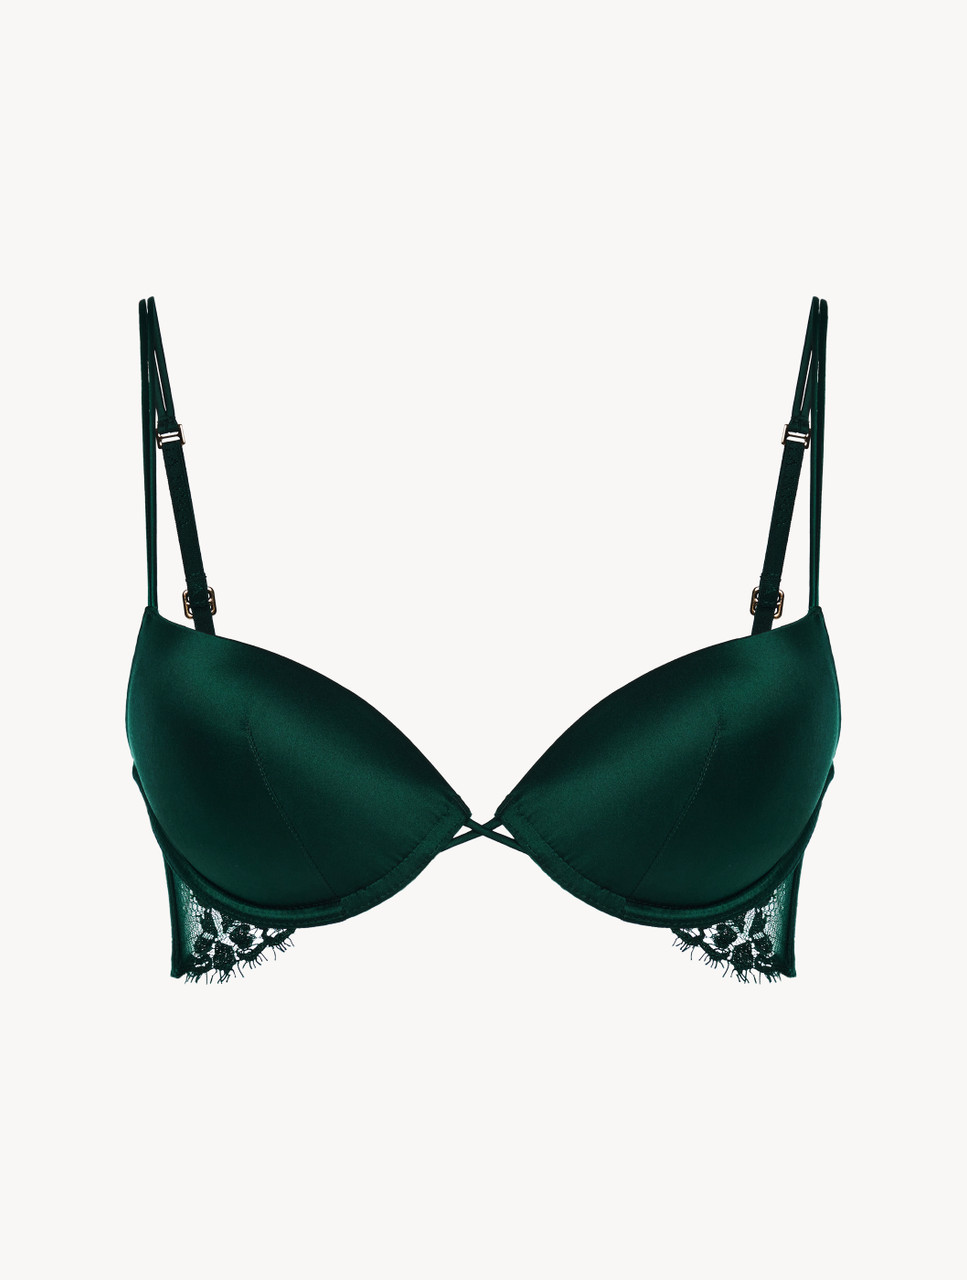 Green push-up bra with Leavers lace trim - La Perla - Russia